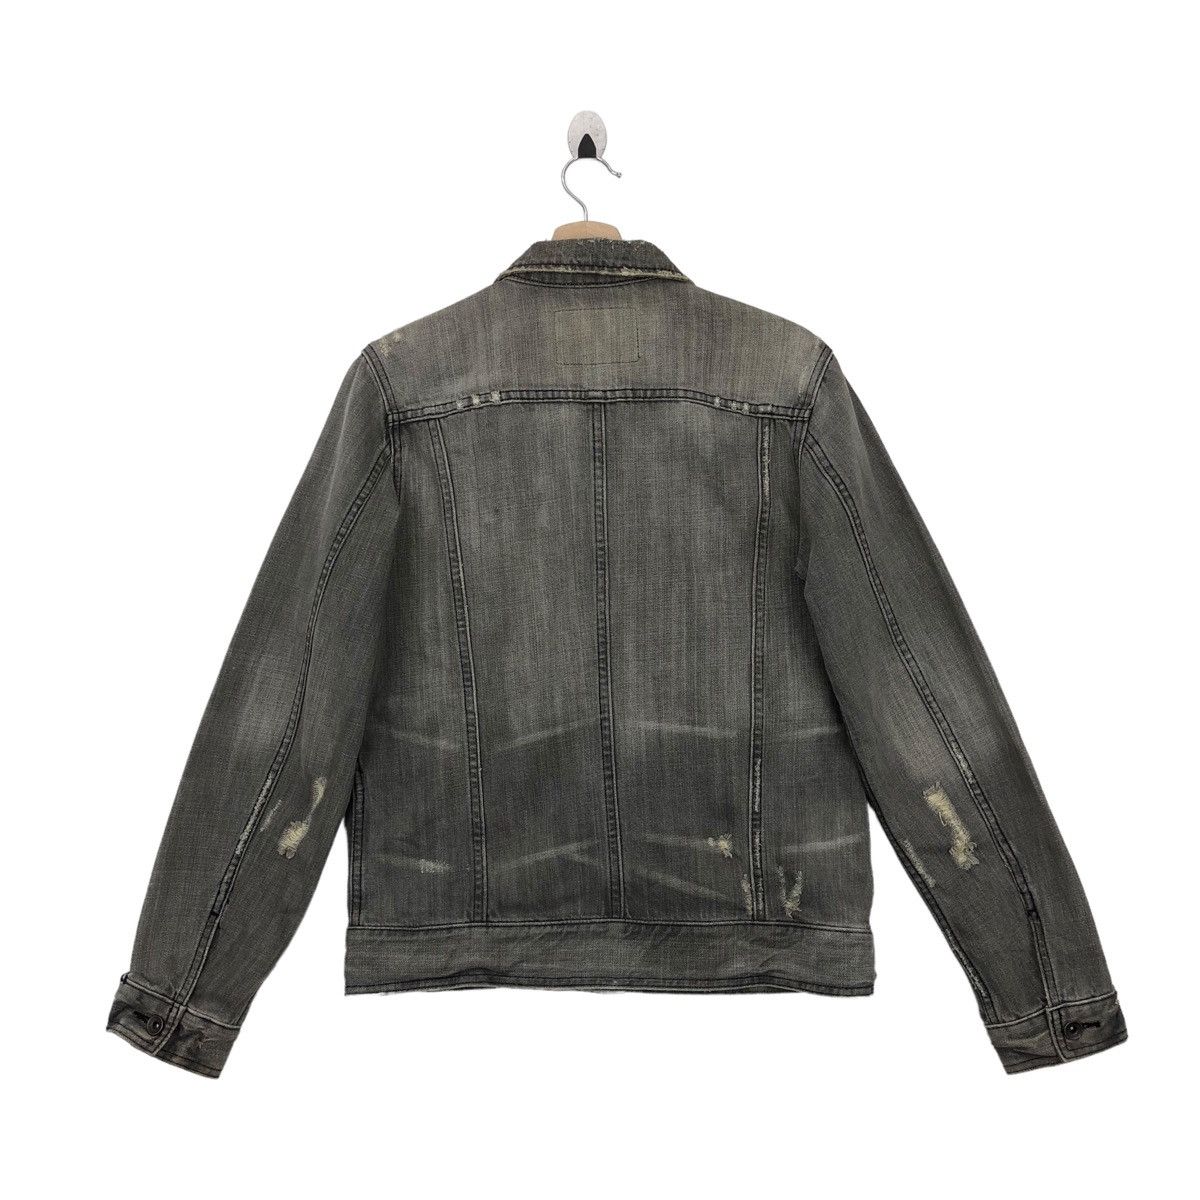 Vintage Vtg BEAMS Mineral Wash Distressed Denim Jacket Puffer Size US S / EU 44-46 / 1 - 2 Preview